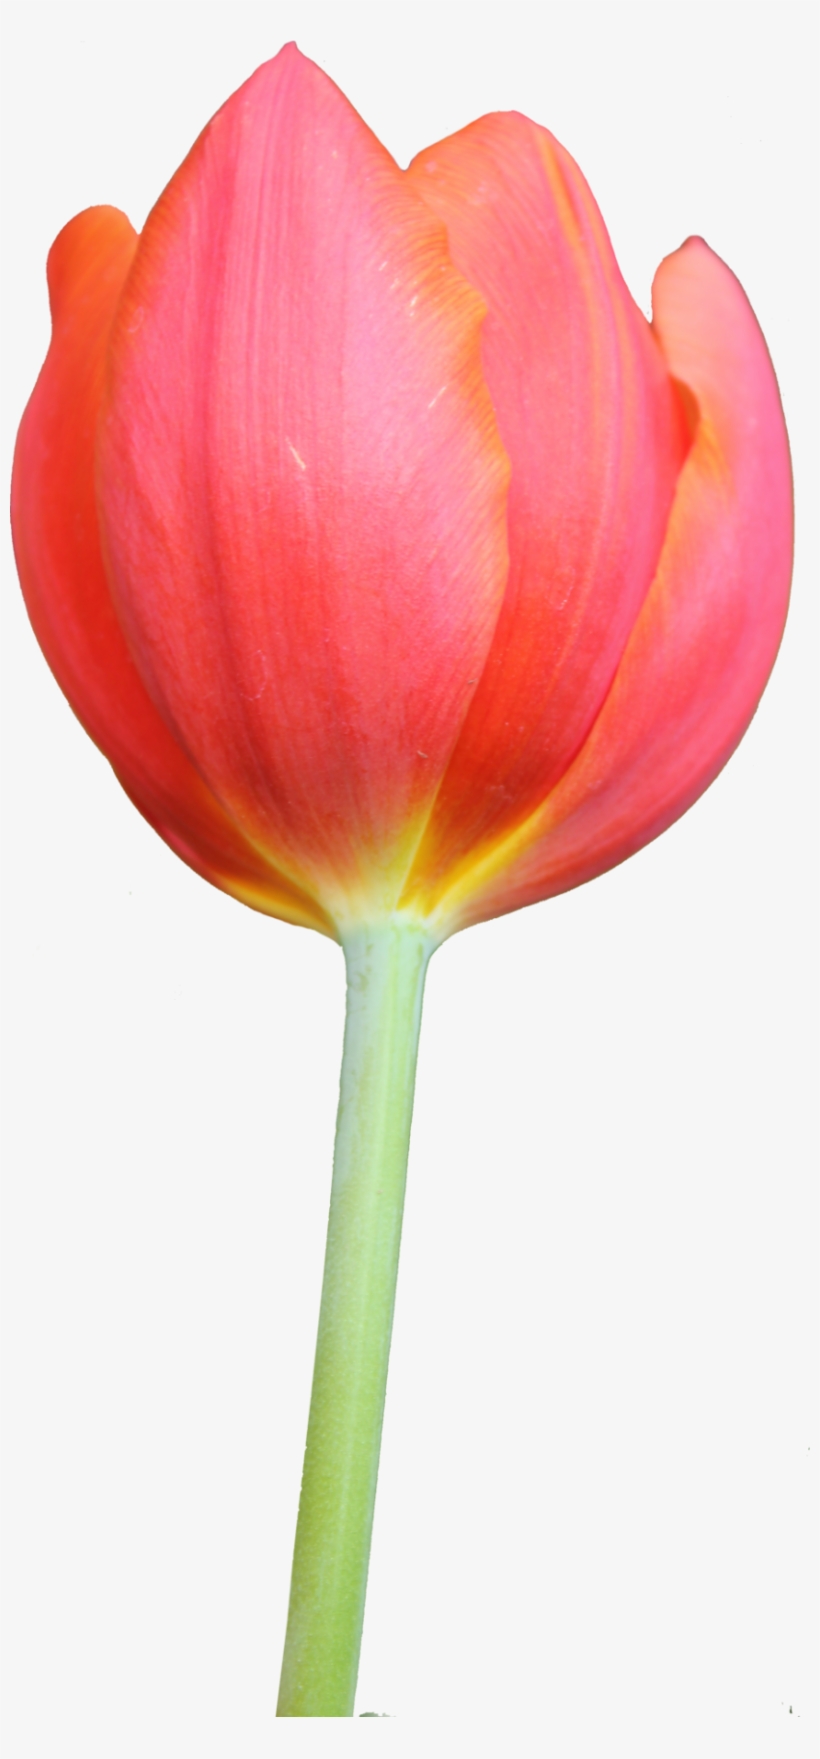 Tulip Clipart Orange - Tulip Png Images Hd, transparent png #501666